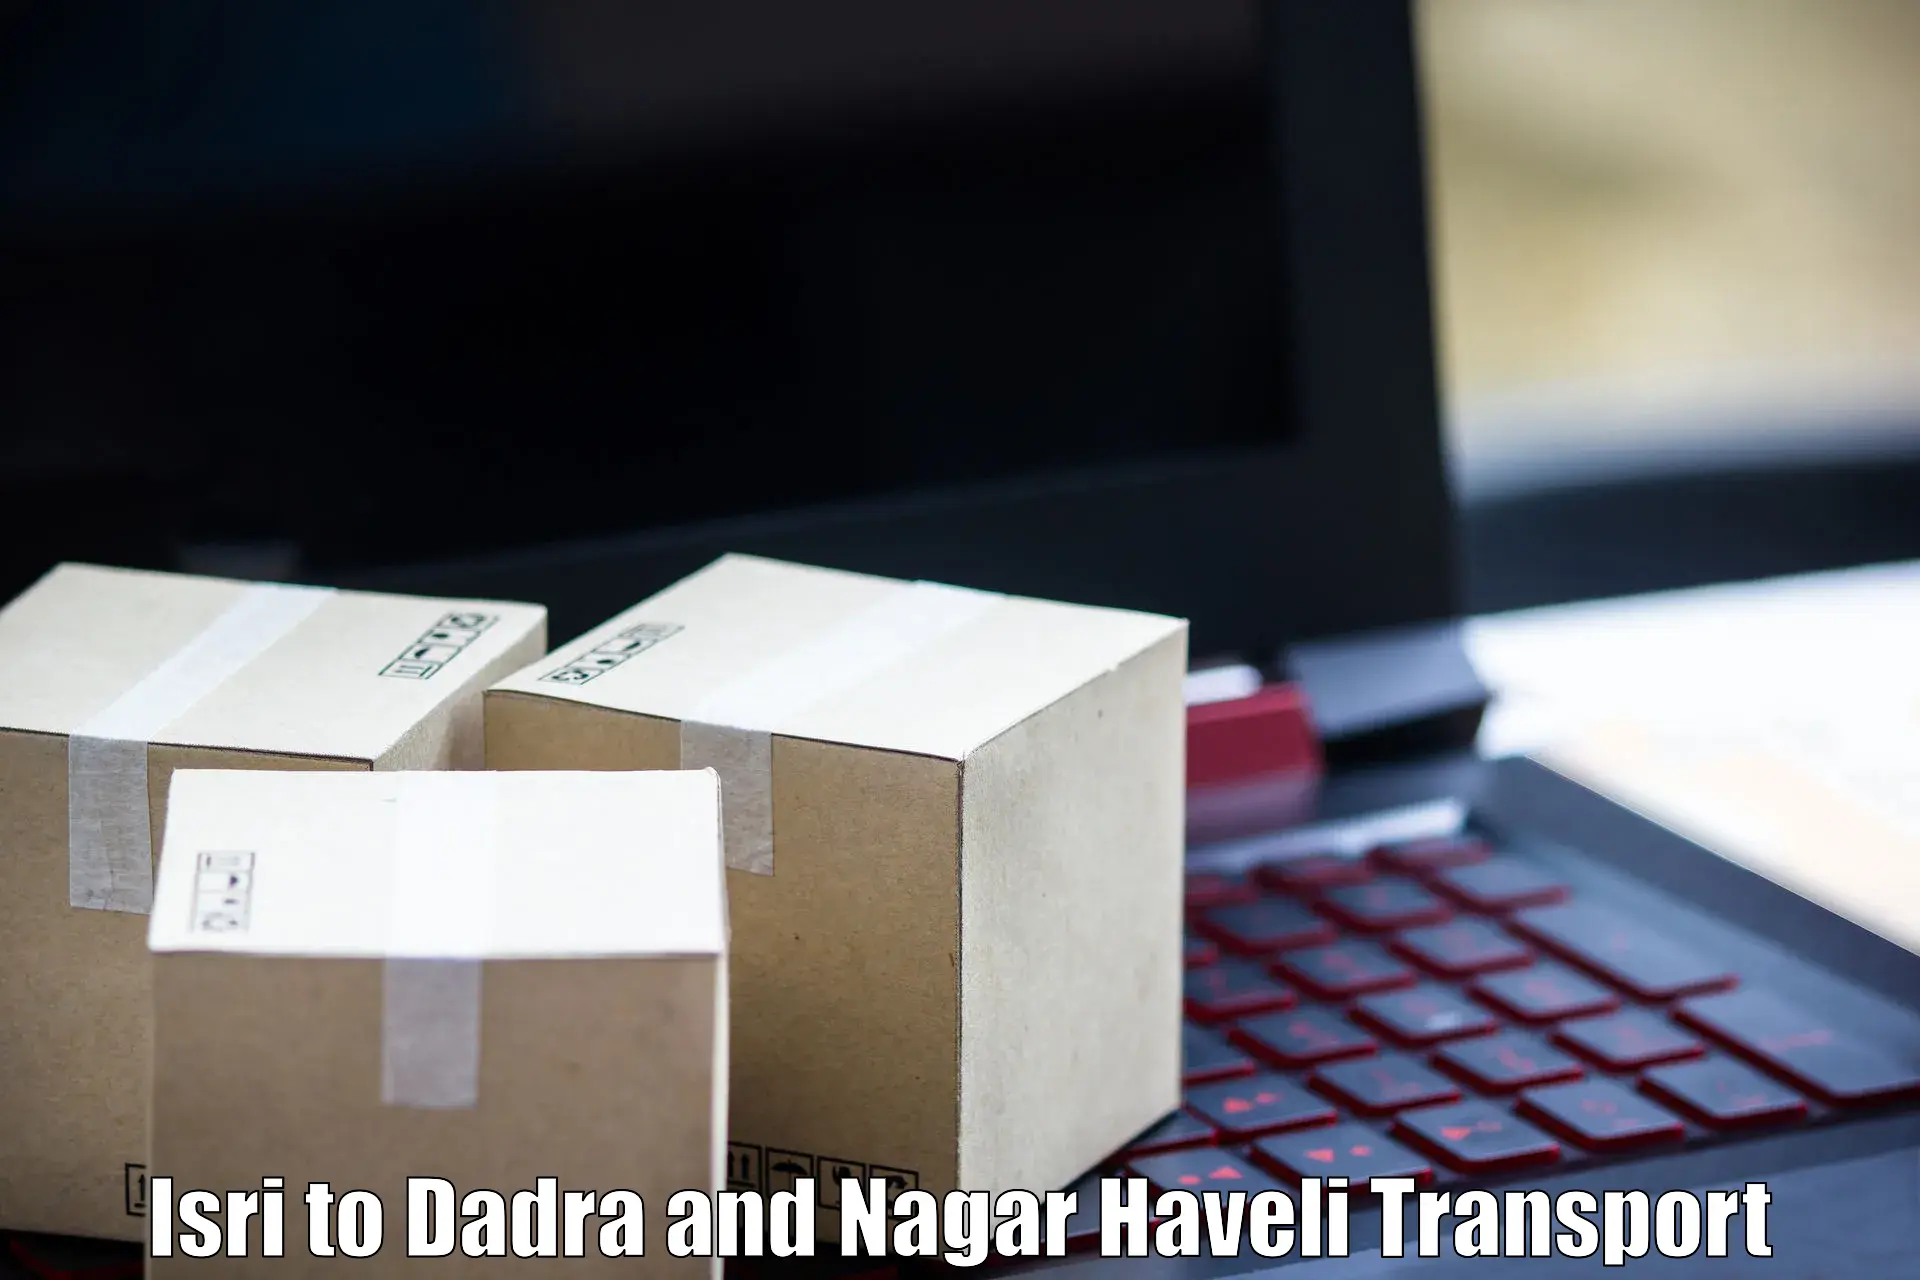 Furniture transport service Isri to Dadra and Nagar Haveli